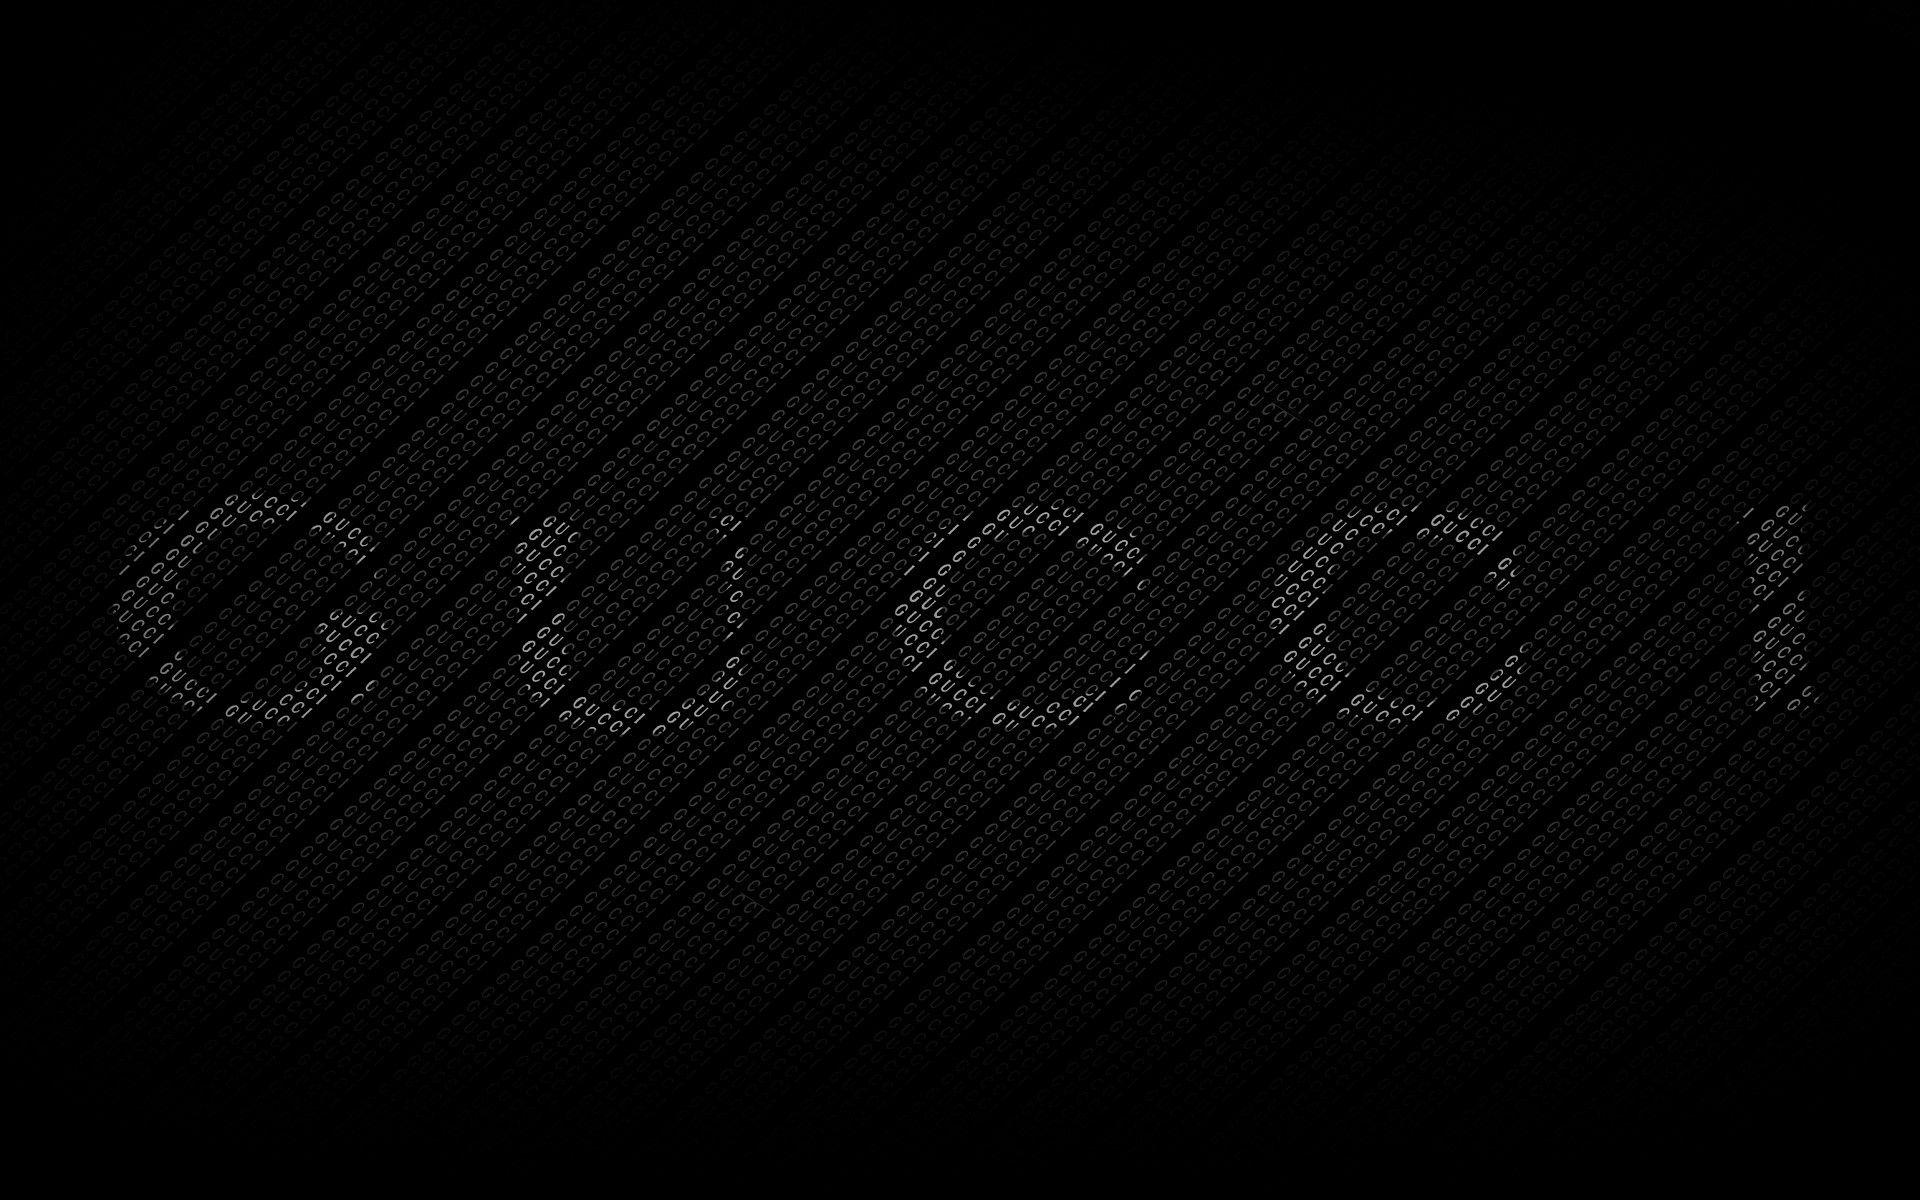 Gucci Logos Wallpapers - Wallpaper Cave